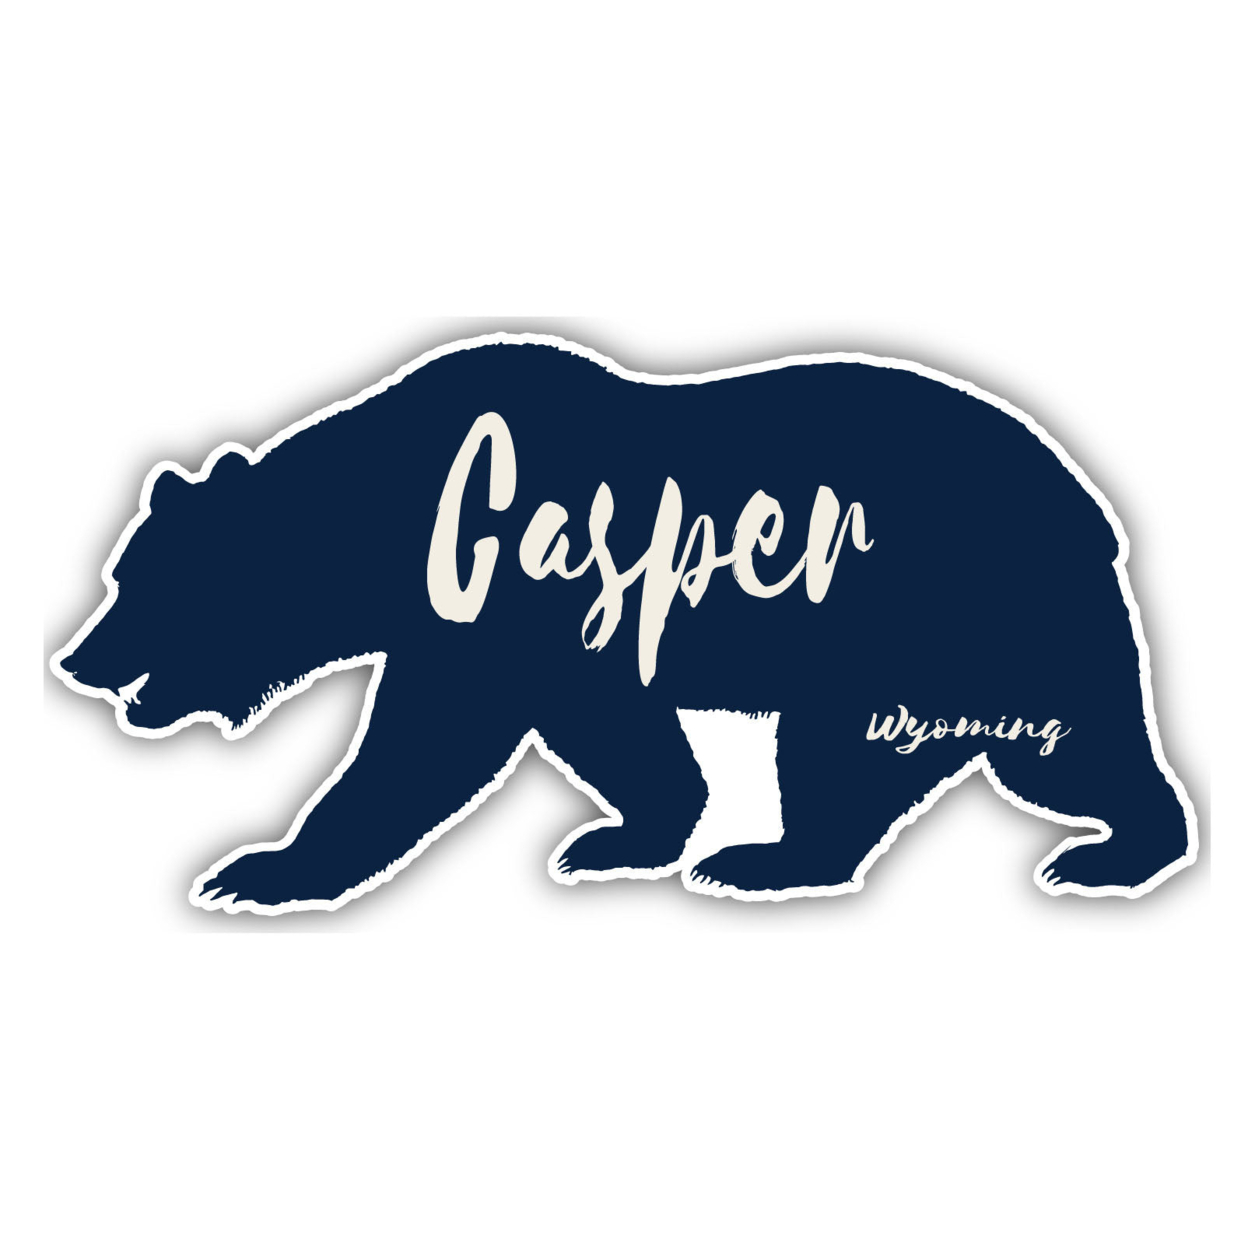 Casper Wyoming Souvenir Decorative Stickers (Choose Theme And Size) - Single Unit, 12-Inch, Camp Life